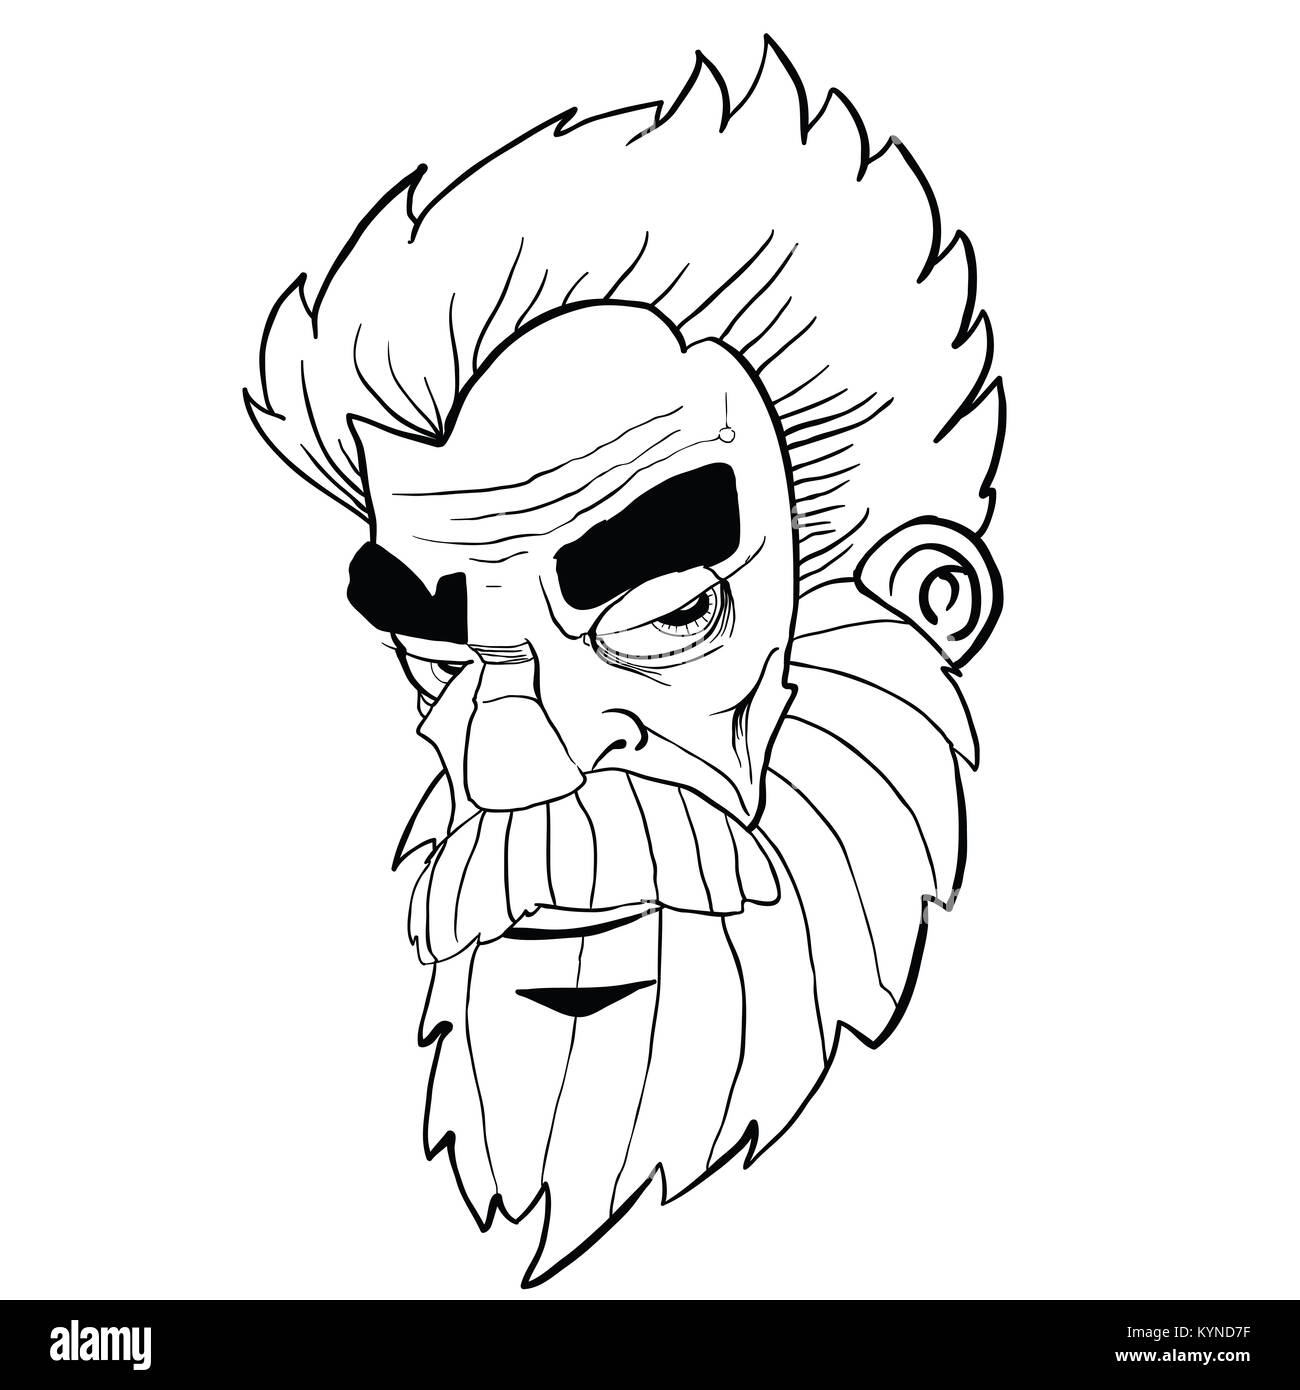 bearded man cartoon illustration isolated on white Stock Photo